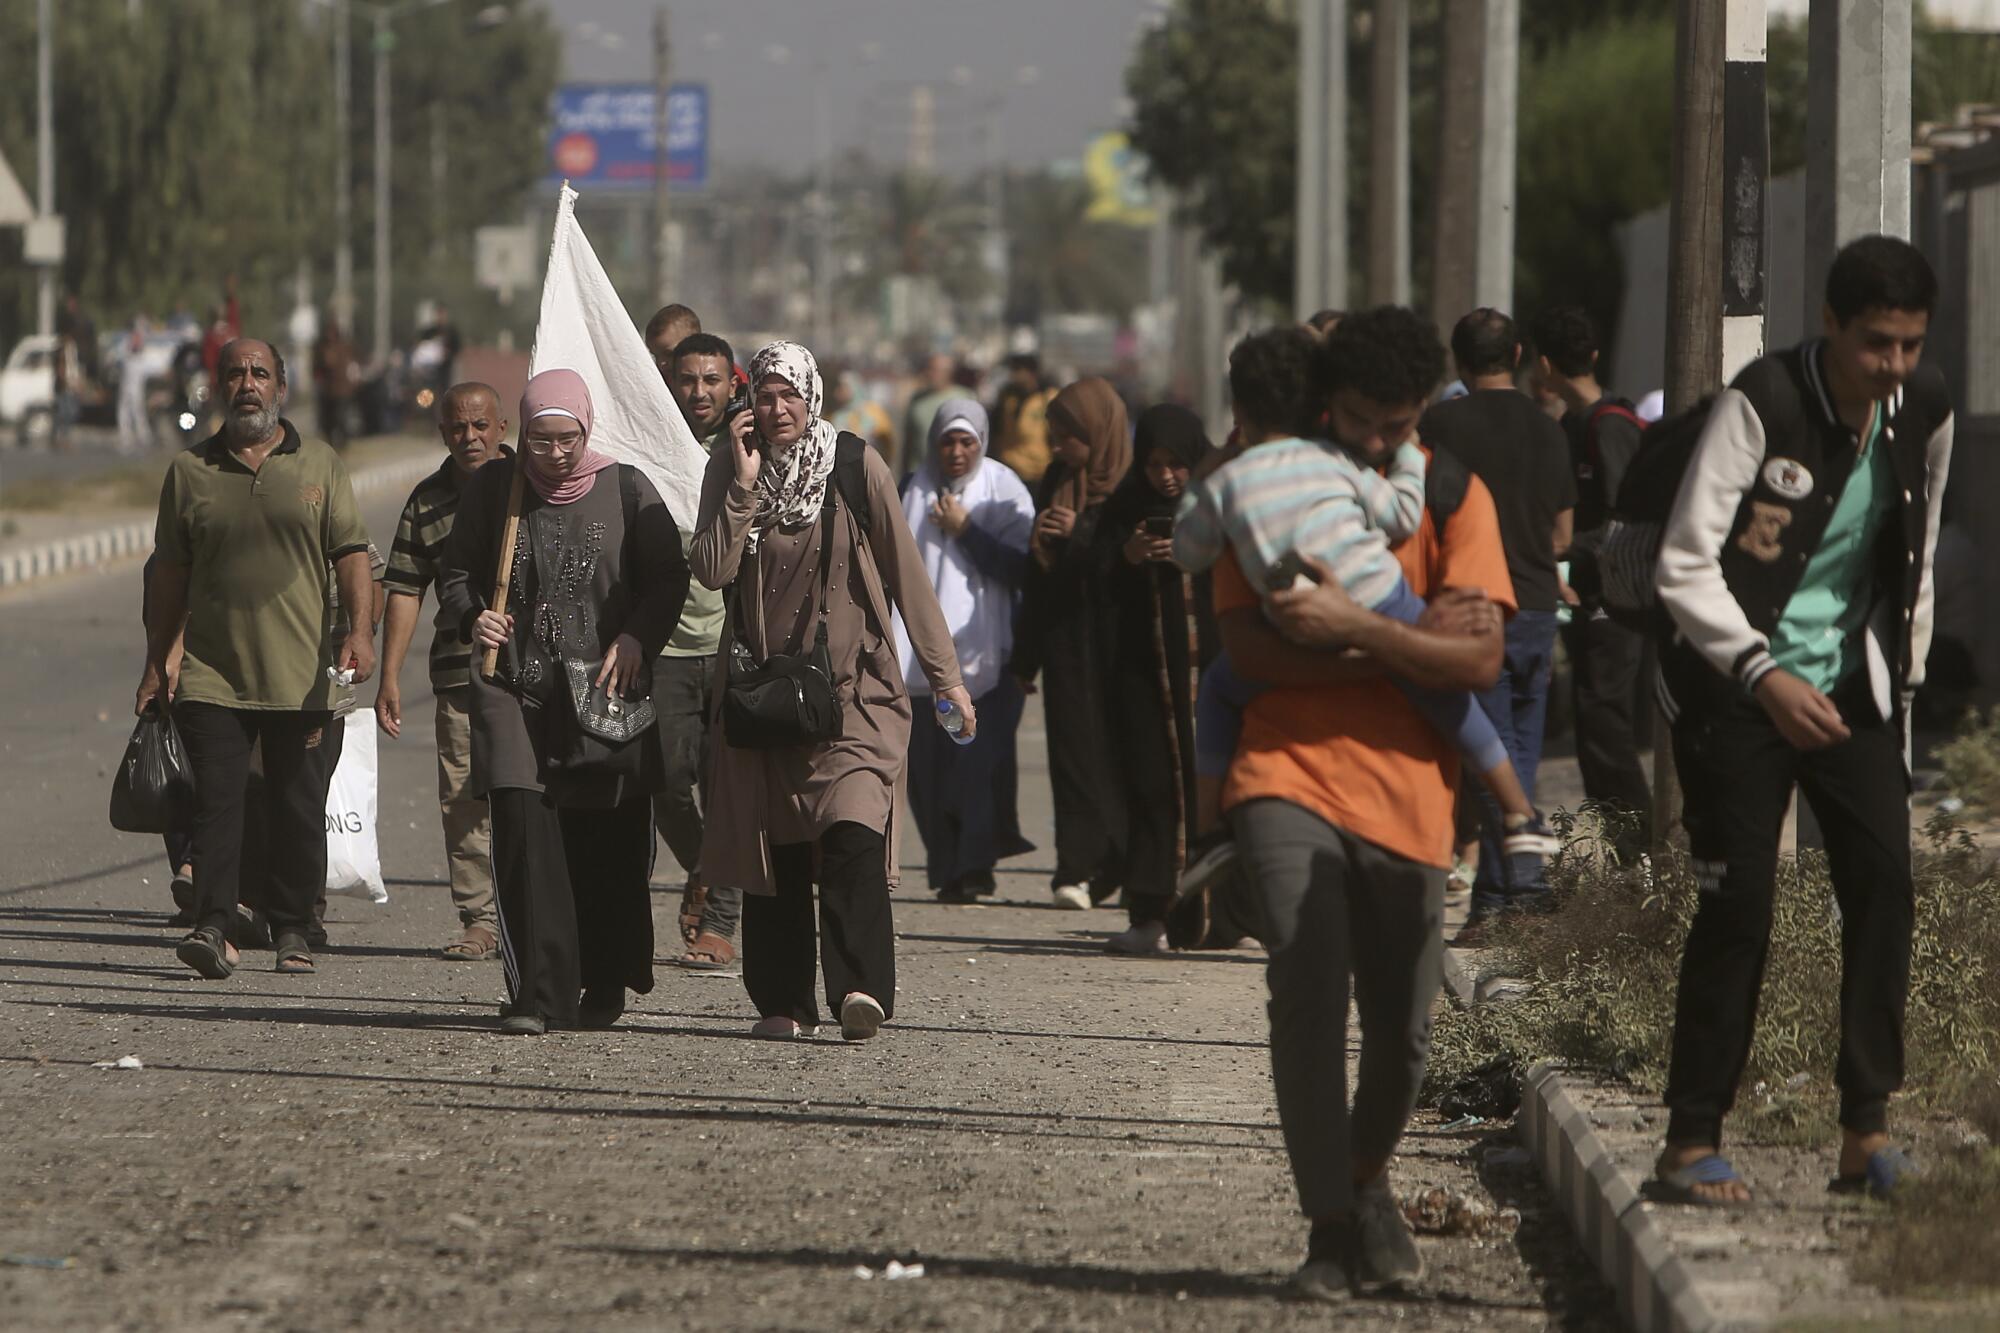 Gazans fleeing south on foot